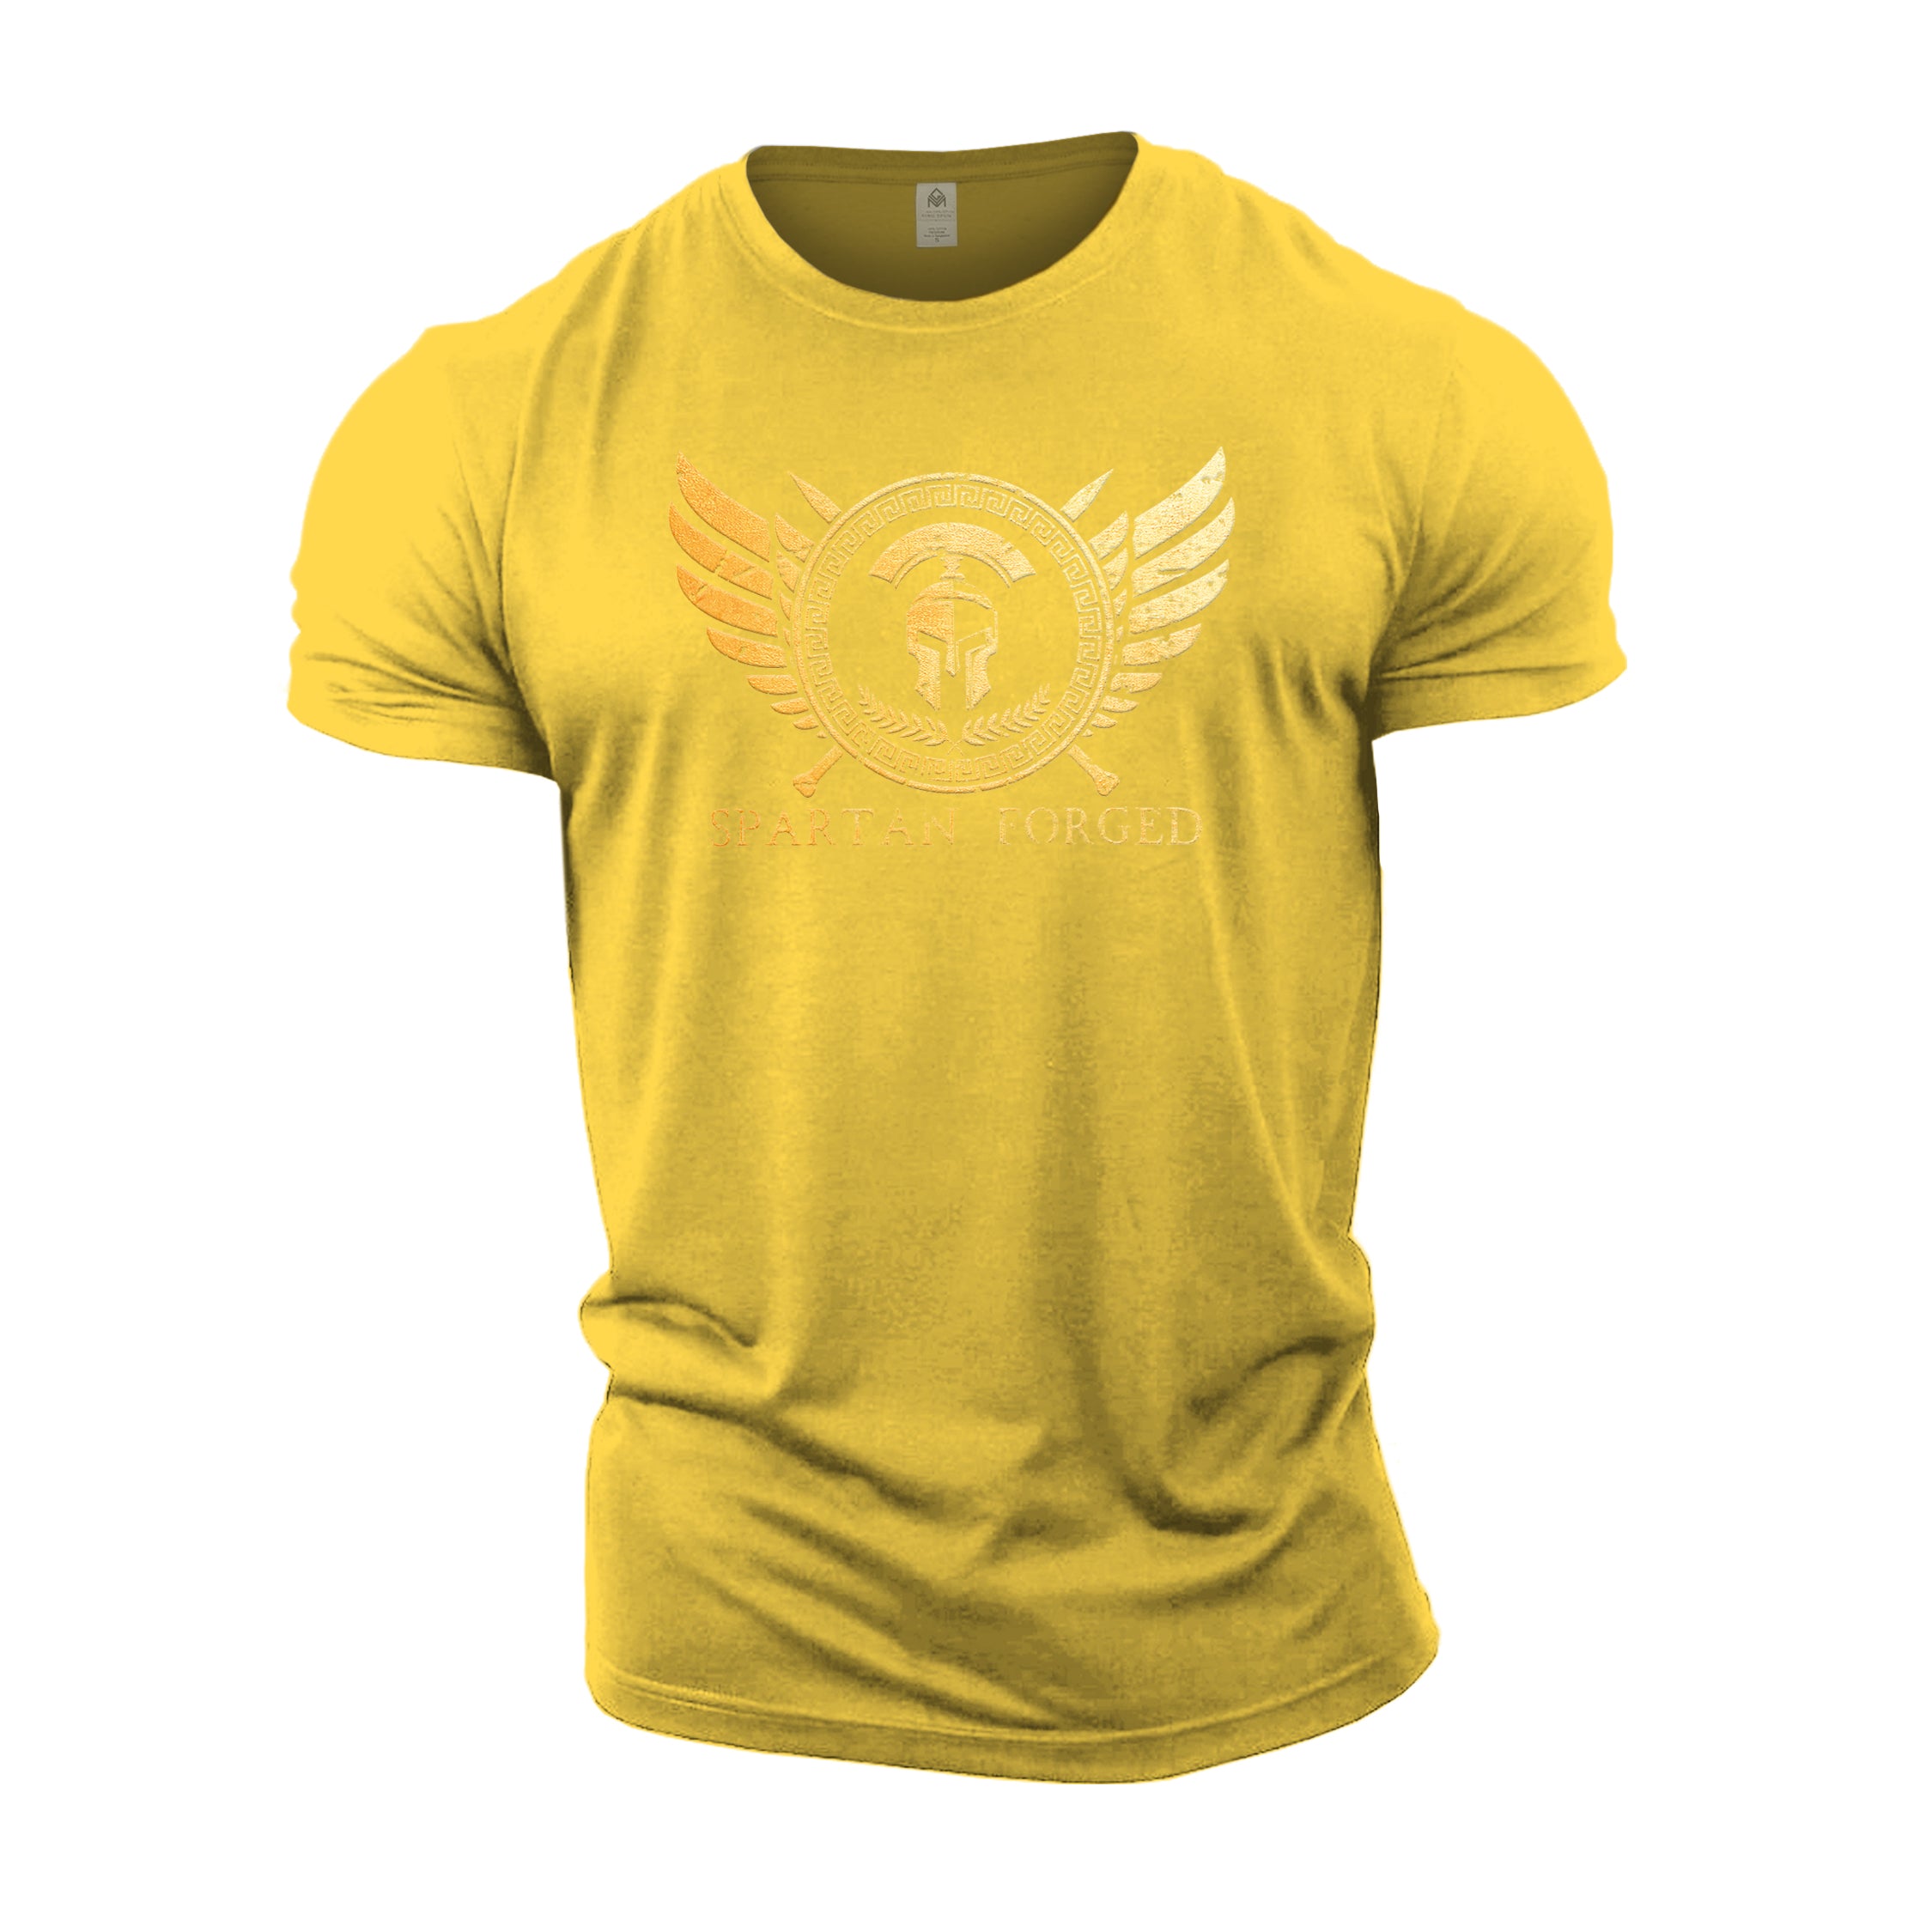 Spartan Forged Chest Emblem Gold - Spartan Forged - Gym T-Shirt